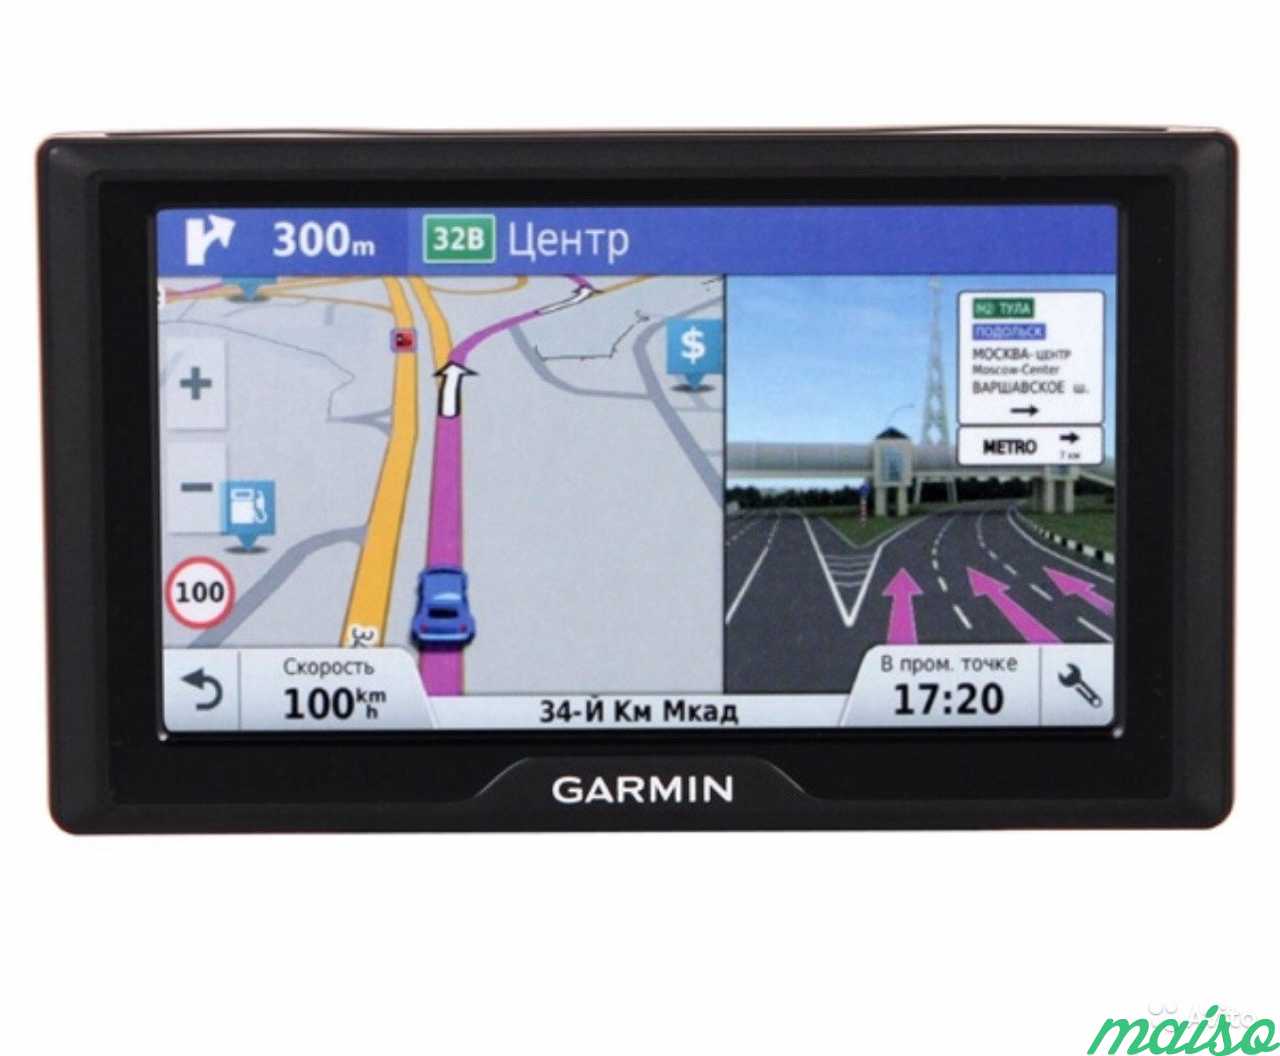 GPS-навигатор Garmin nuvi52 LM в Санкт-Петербурге. Фото 1